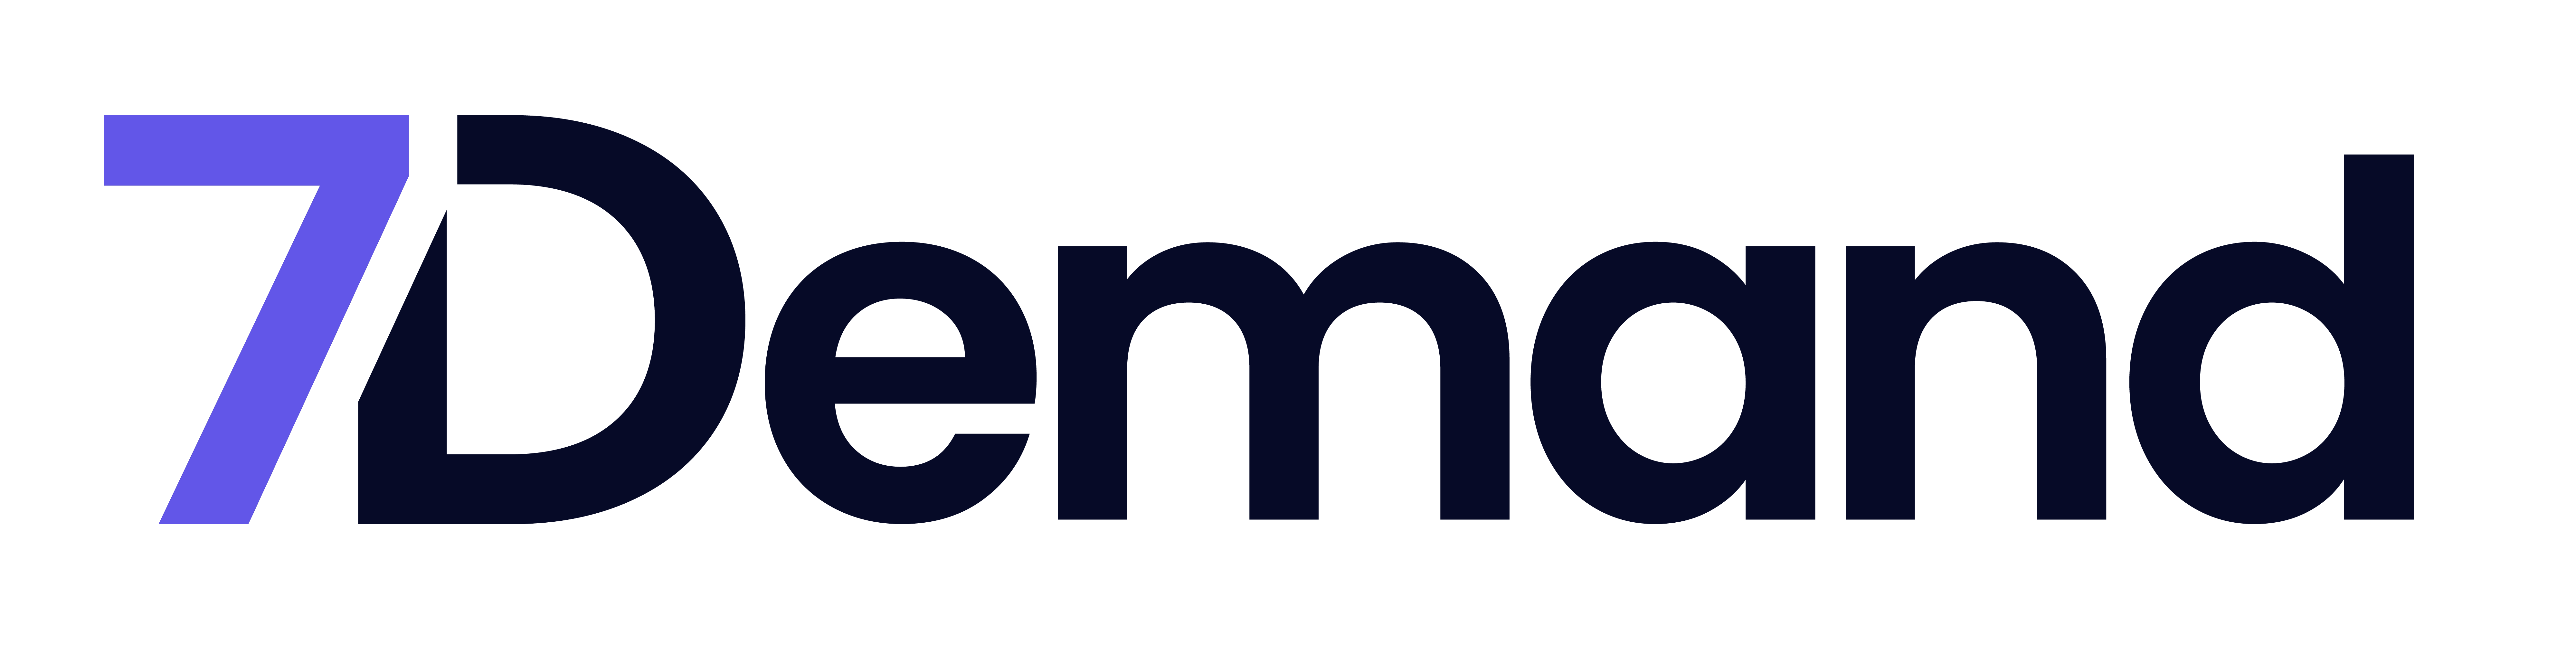 7 Demand Logo-02